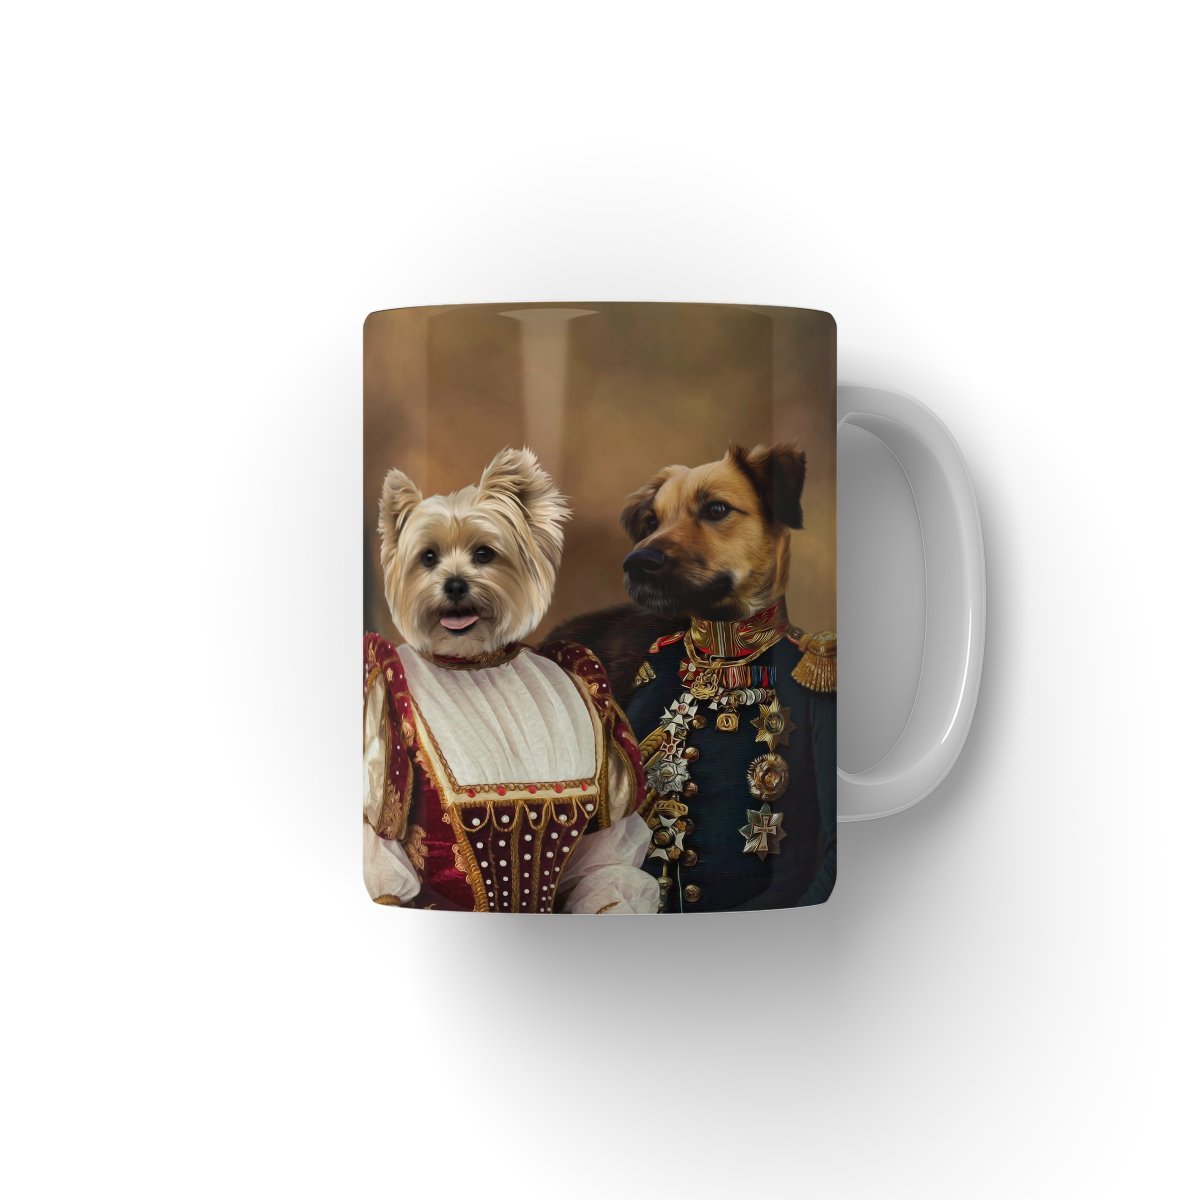 The Classy Pair: Custom Pet Mug - Paw & Glory - #pet portraits# - #dog portraits# - #pet portraits uk#pawandglory, pet art Mug,dog in a mug, mug for dog, design your own coffee mug, cute dog mugs, personalised animal mugs